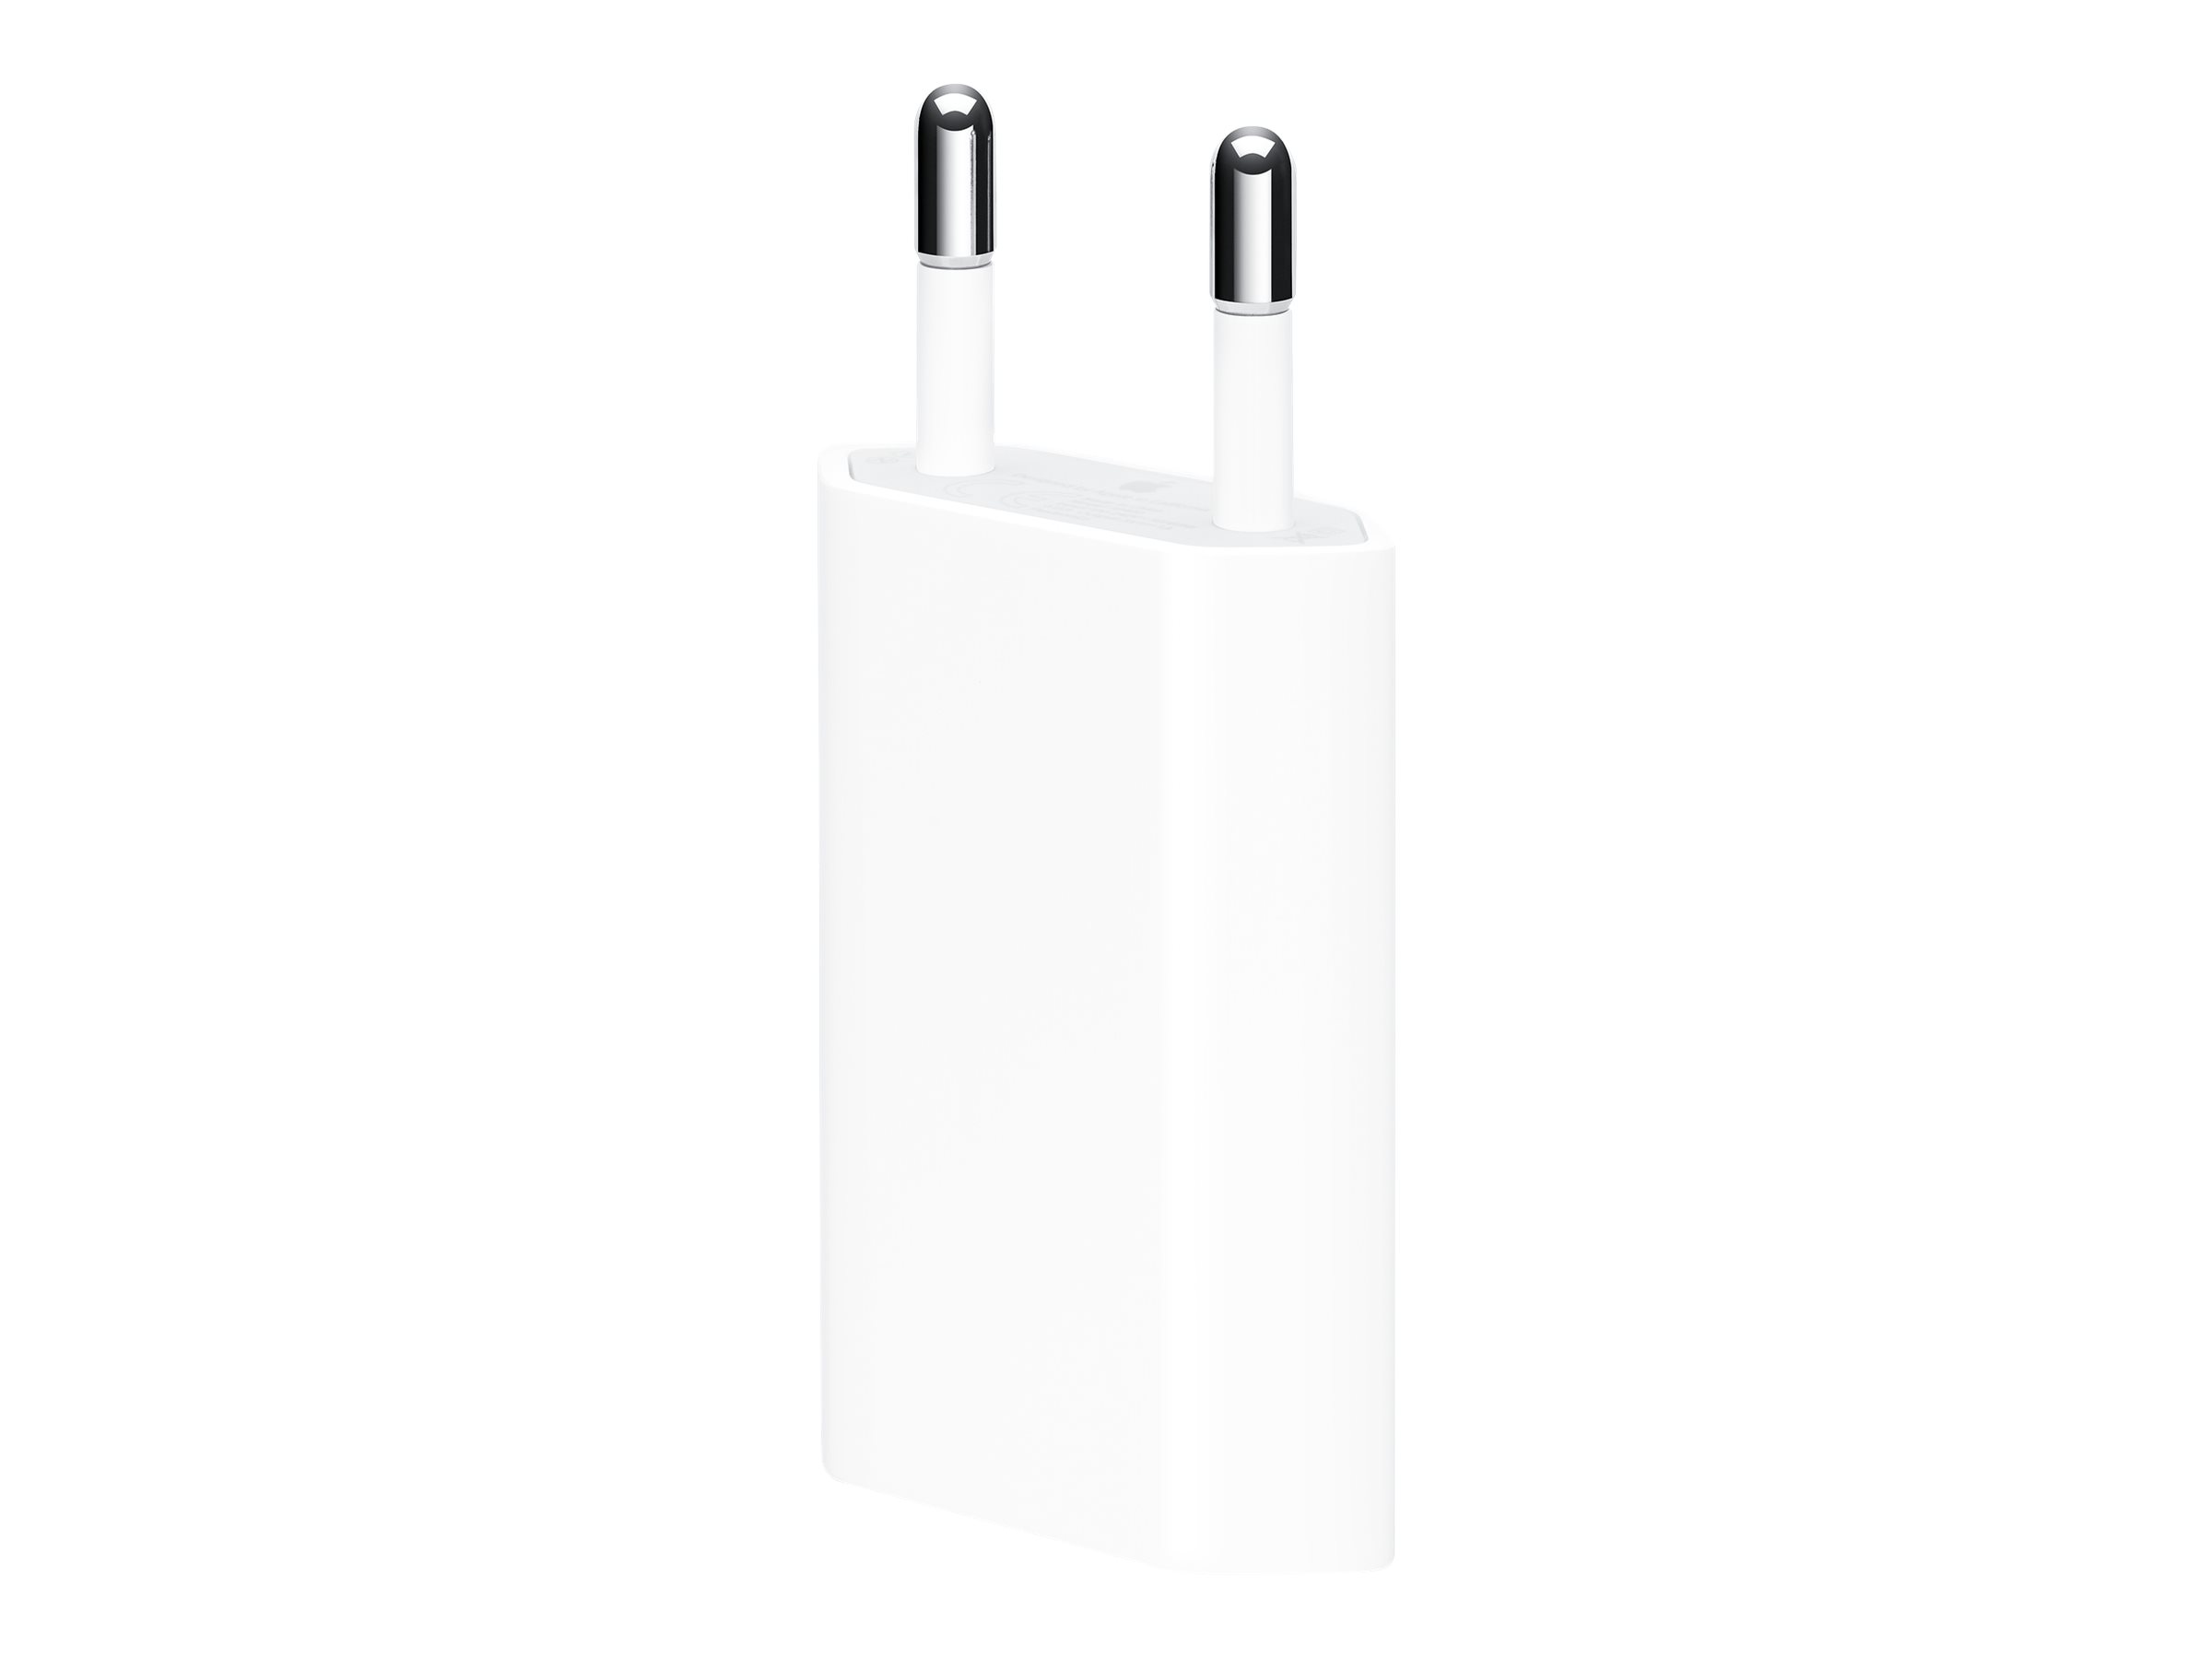 Apple 5W USB Power Adapter - Netzteil - 5 Watt (USB)